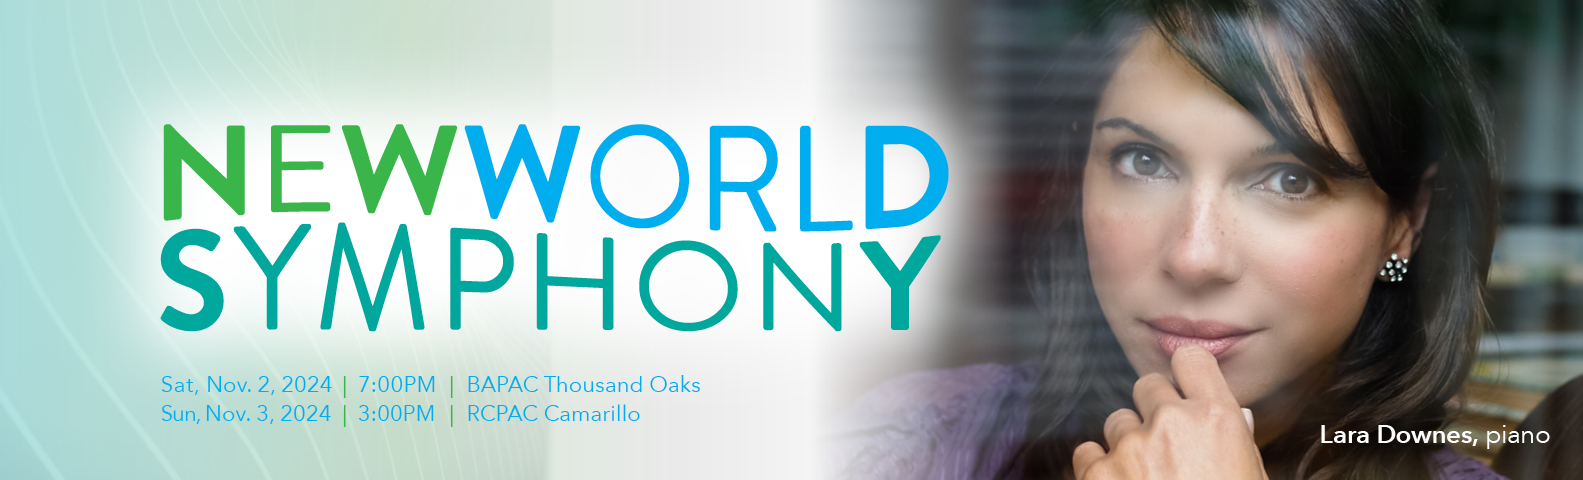 New World Symphony featuring Lara Downes